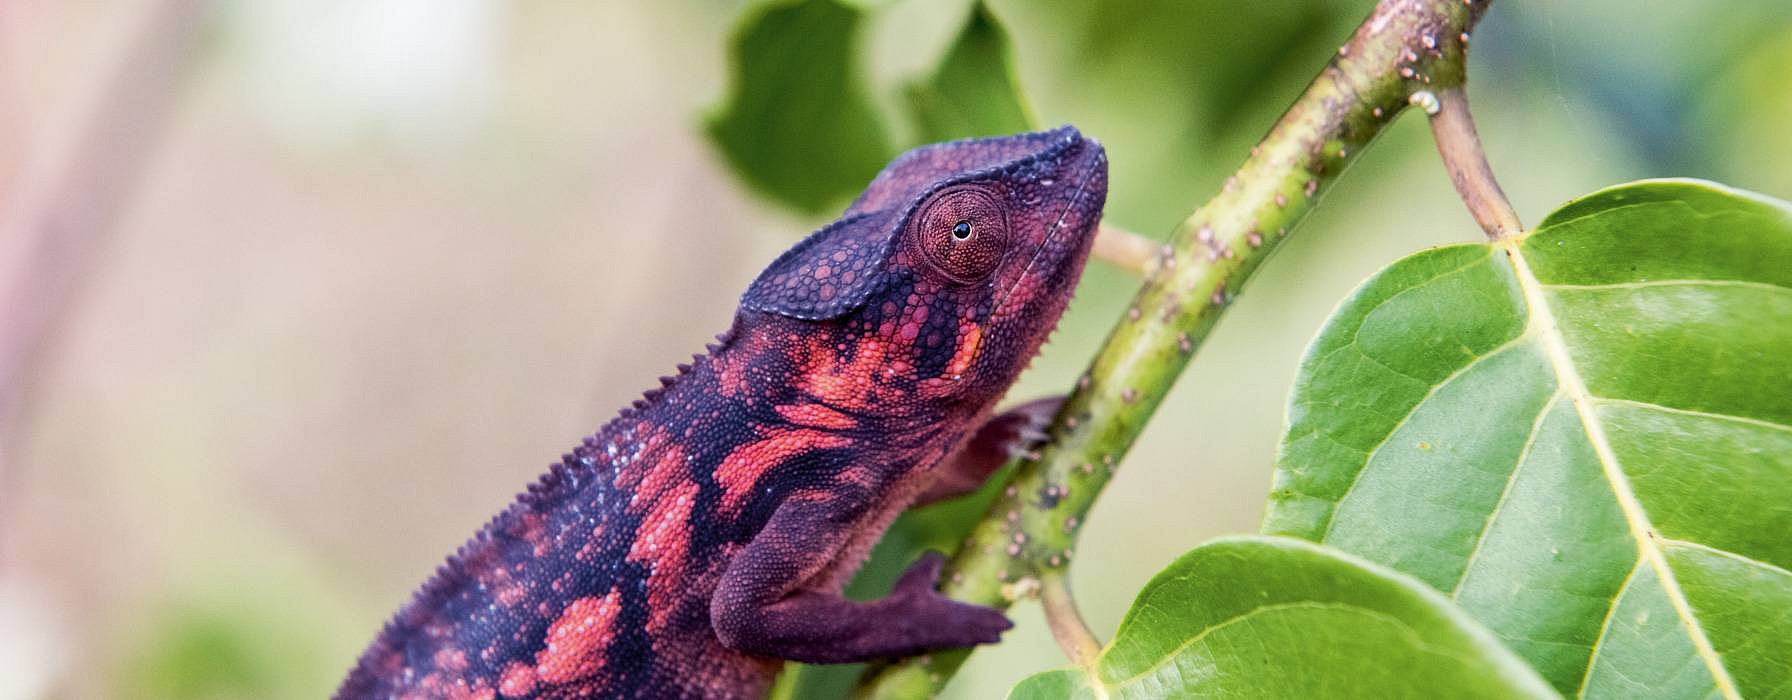 hd_biodiversity_interview_chameleon